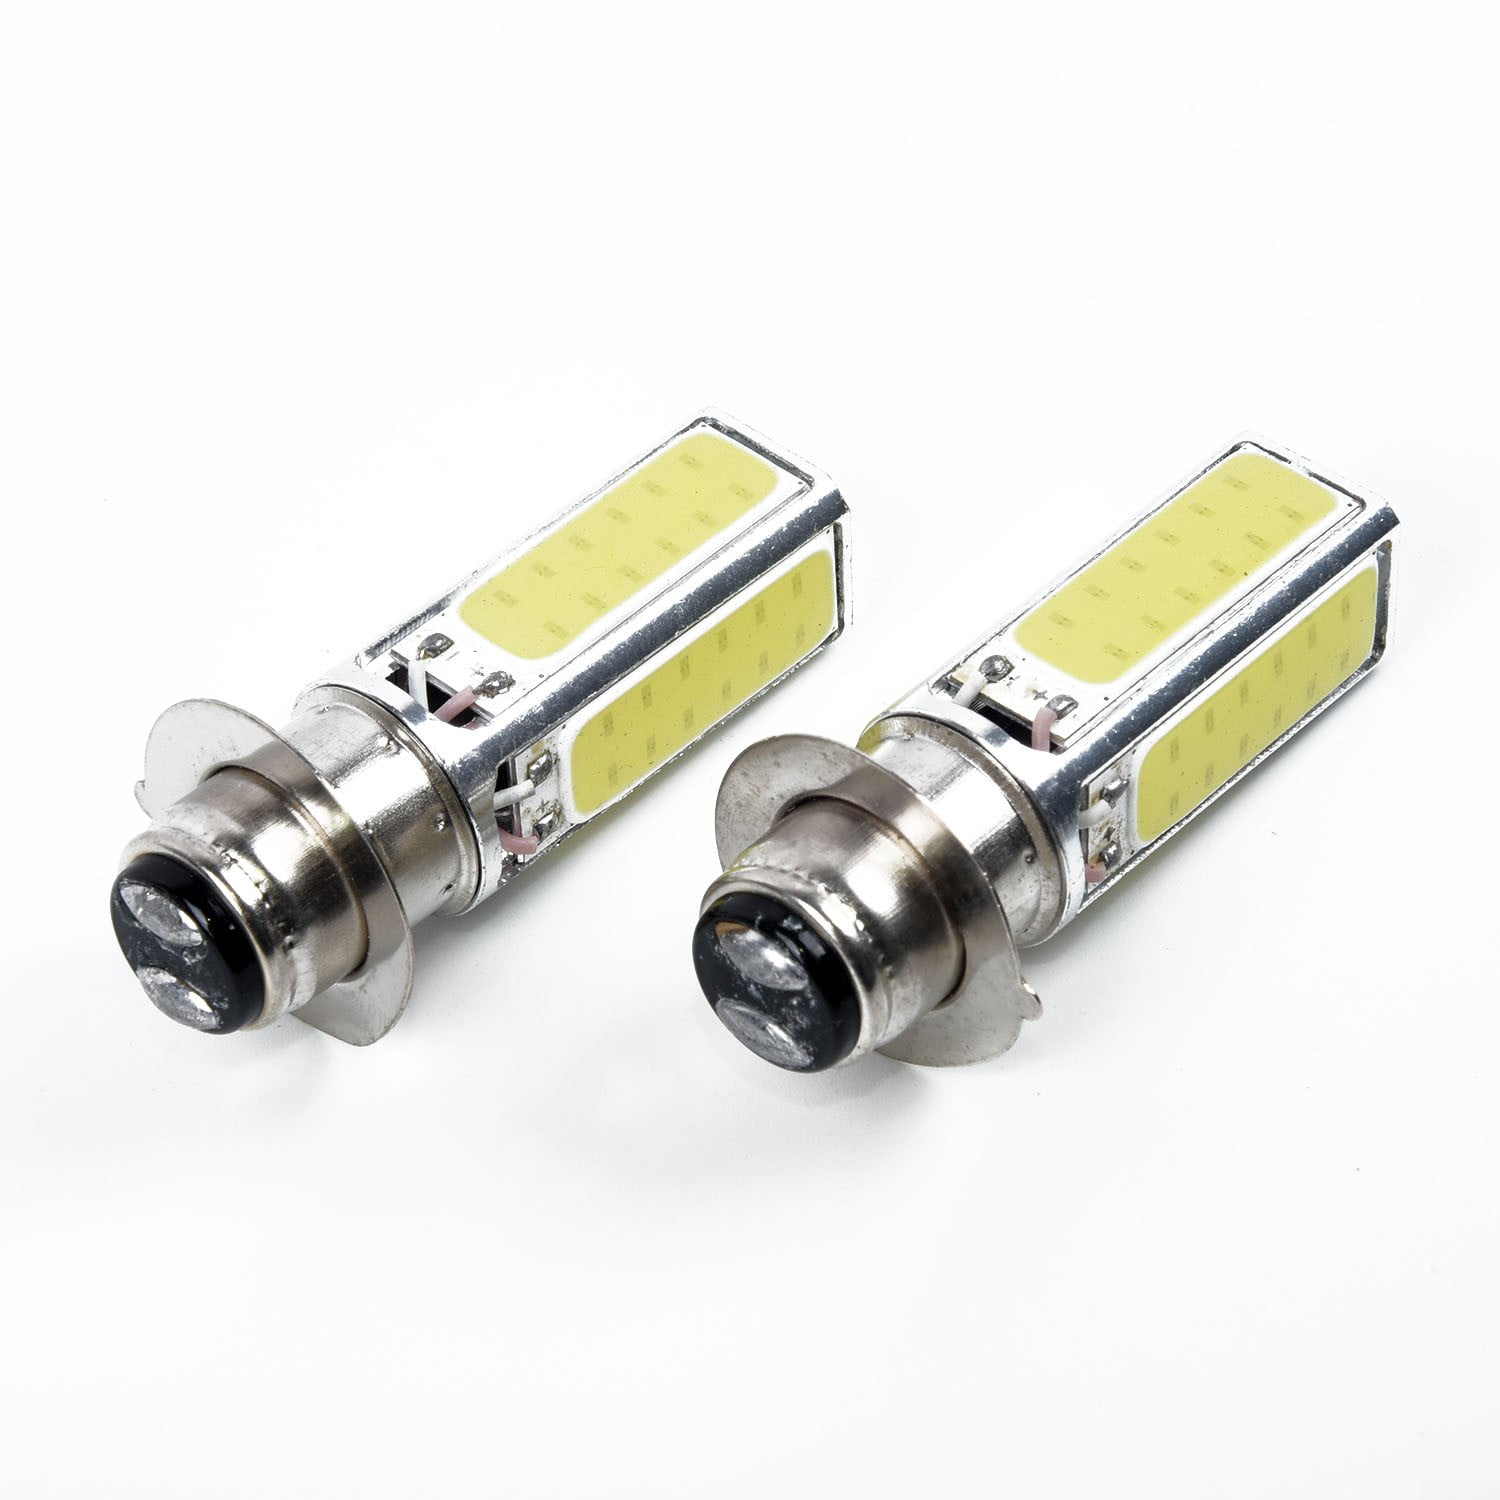 Details about   2x LED Headlight Bulbs For Honda ATC110 ATC200E ATC200M TRX125 TRX200SX TRX250 